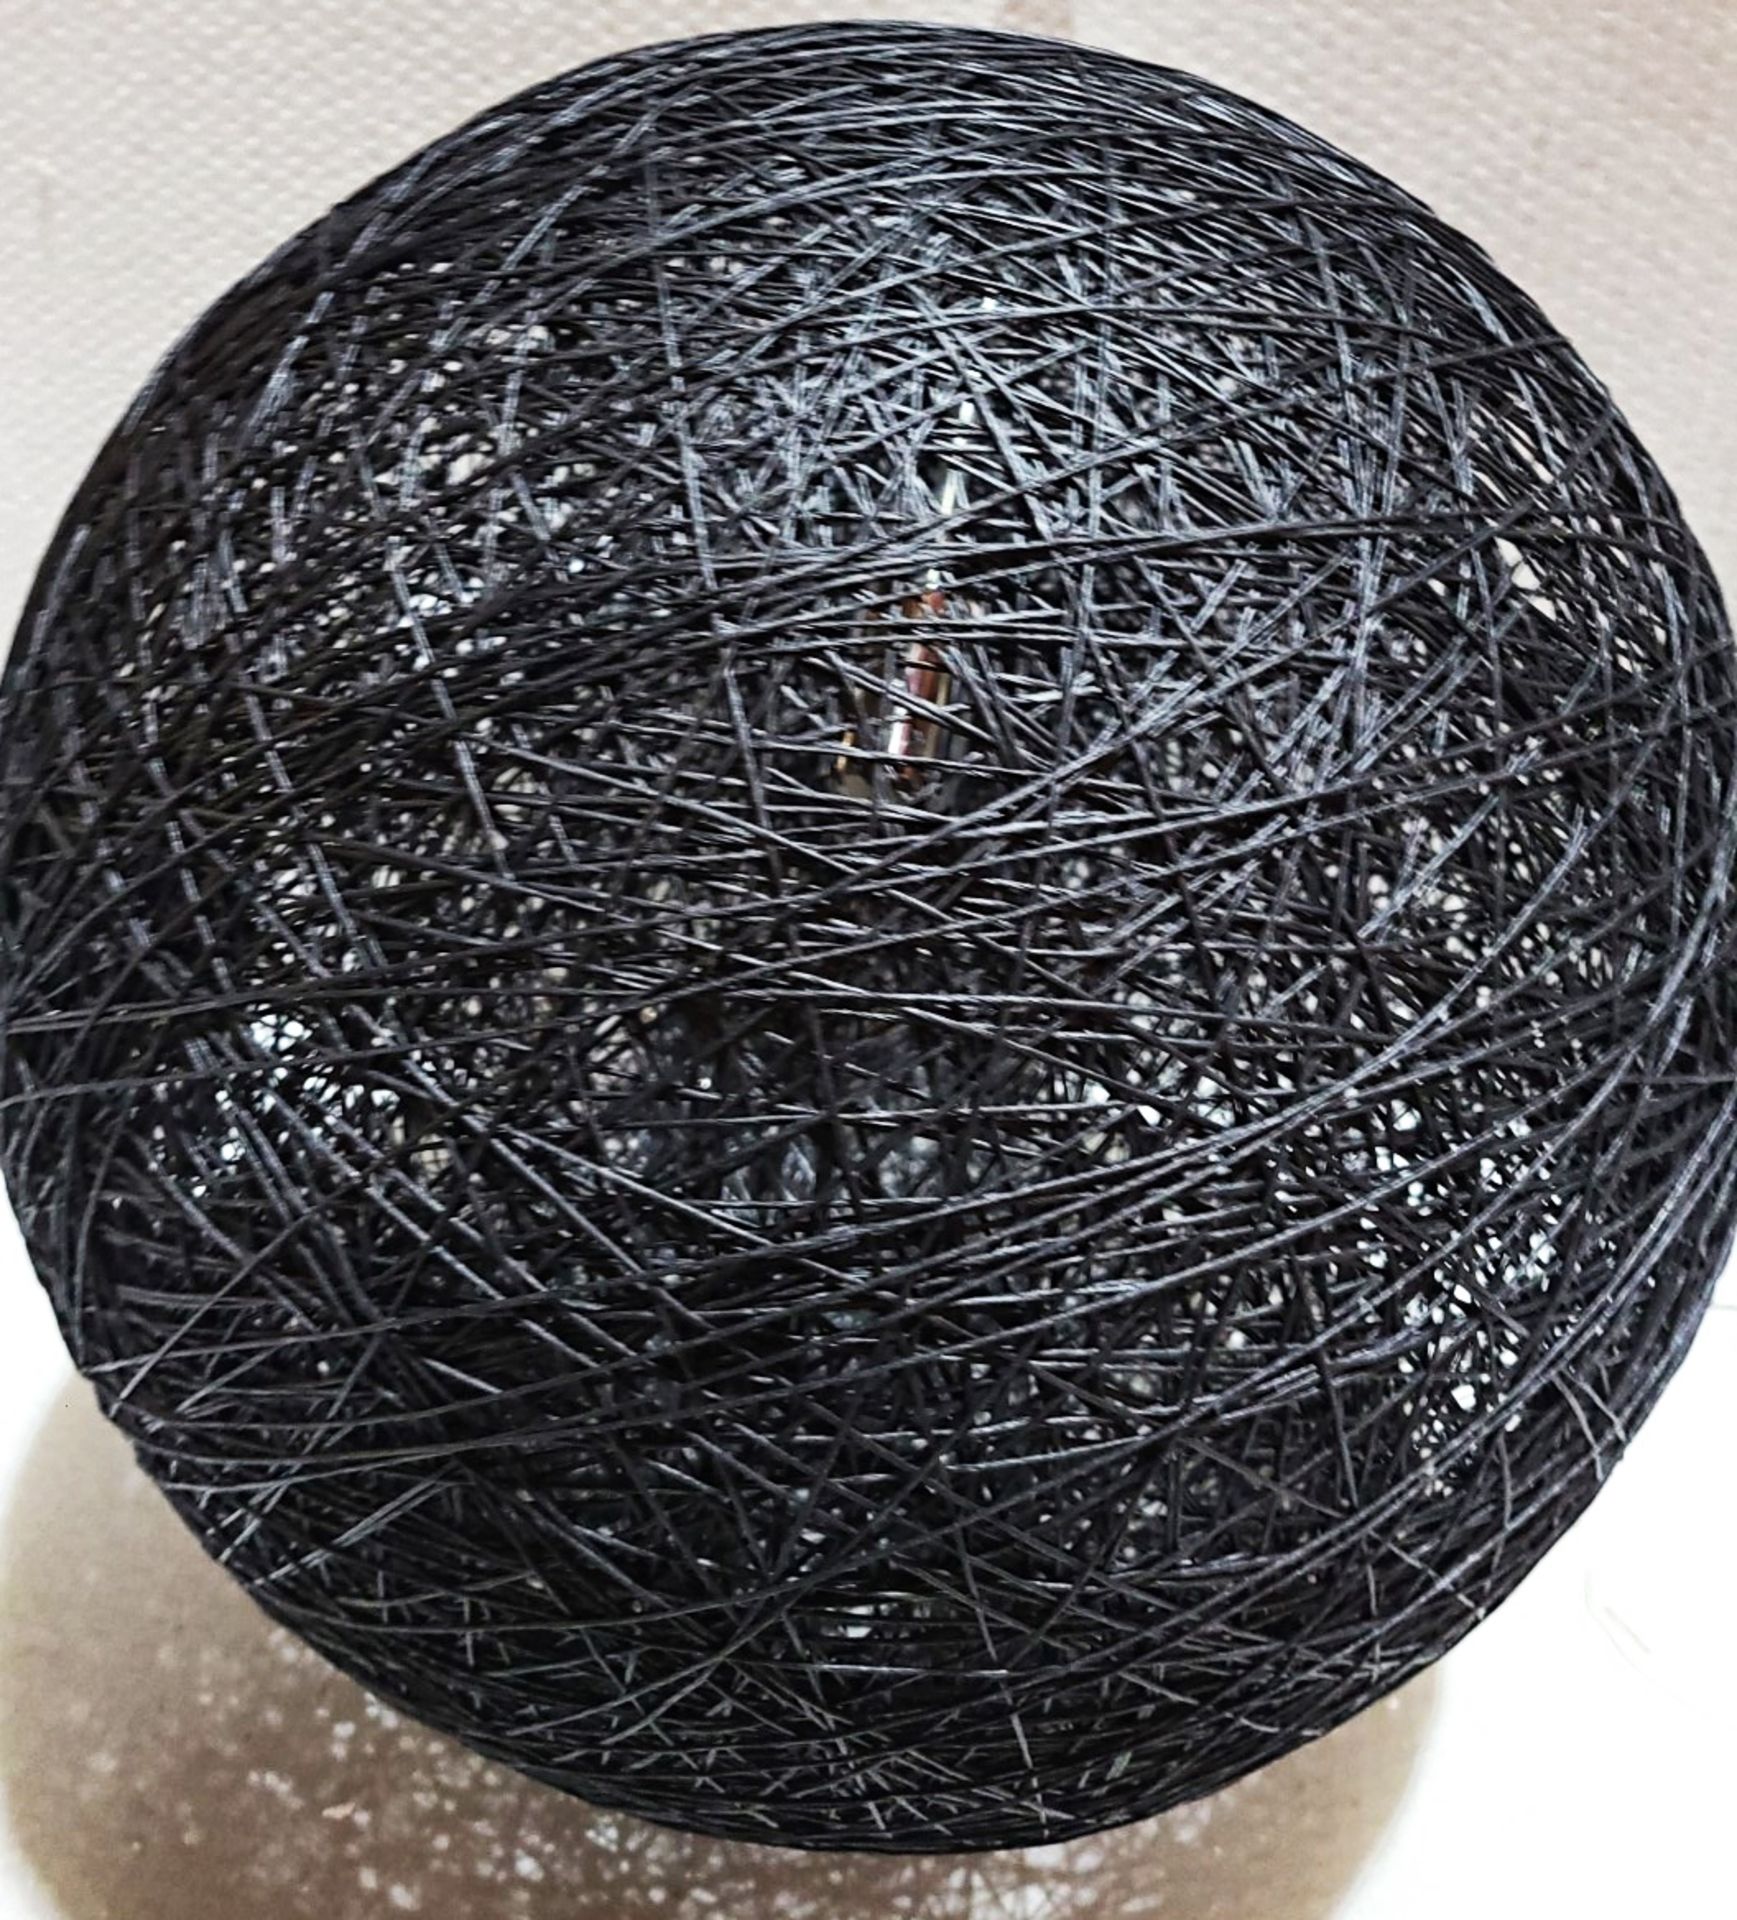 1 x BLUESUNTREE Eye-Catching 55cm Jet Black Woven String Resin Ball Pendant Lamp Wired For Mains